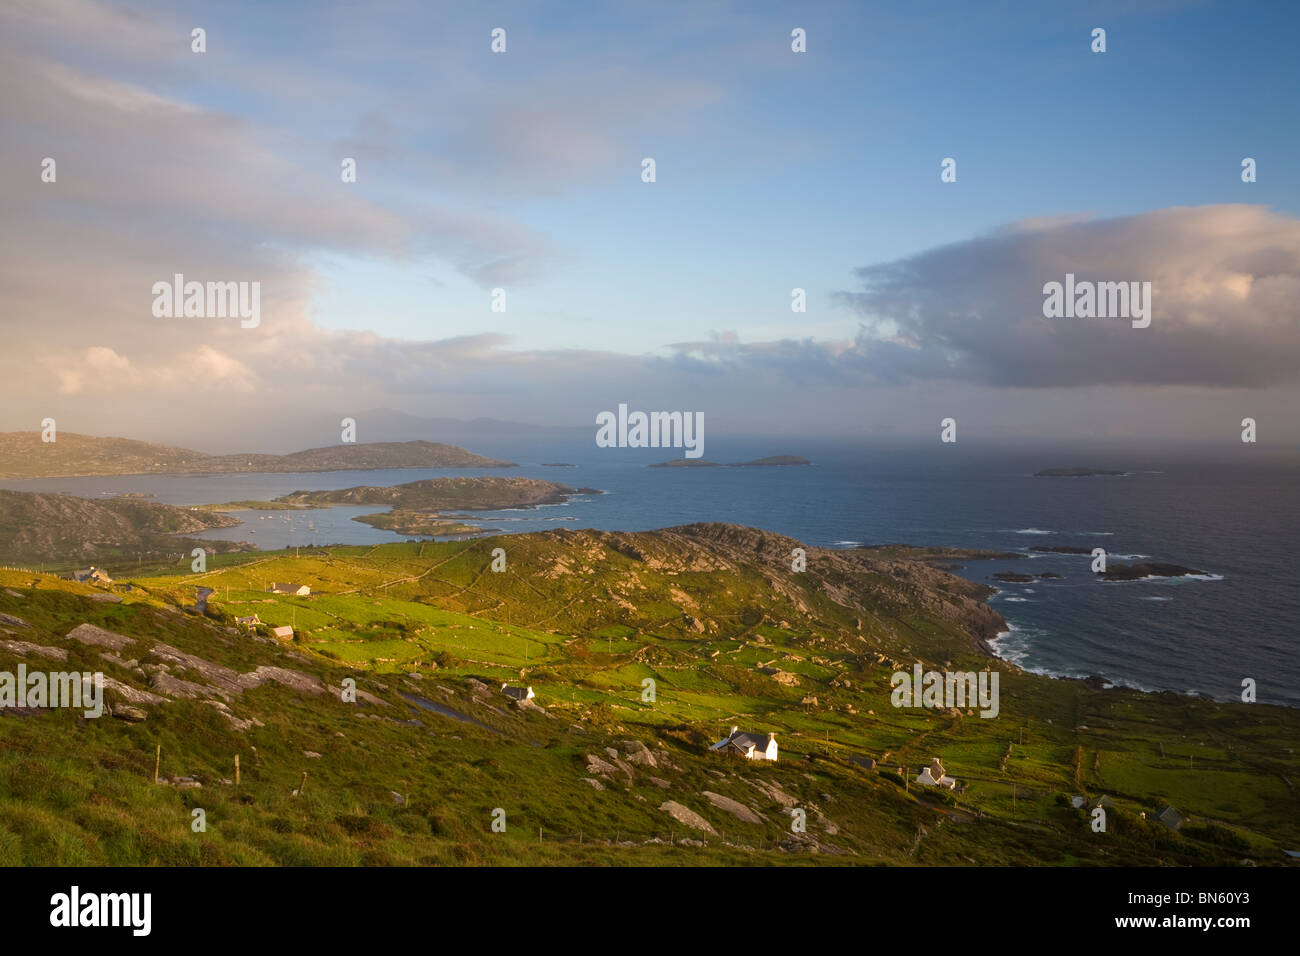 Schroffe Küstenlandschaft bei Sonnenuntergang, beleuchtet, Derrynane Bay, Iveragh-Halbinsel, Ring of Kerry, Co. Kerry, Irland Stockfoto